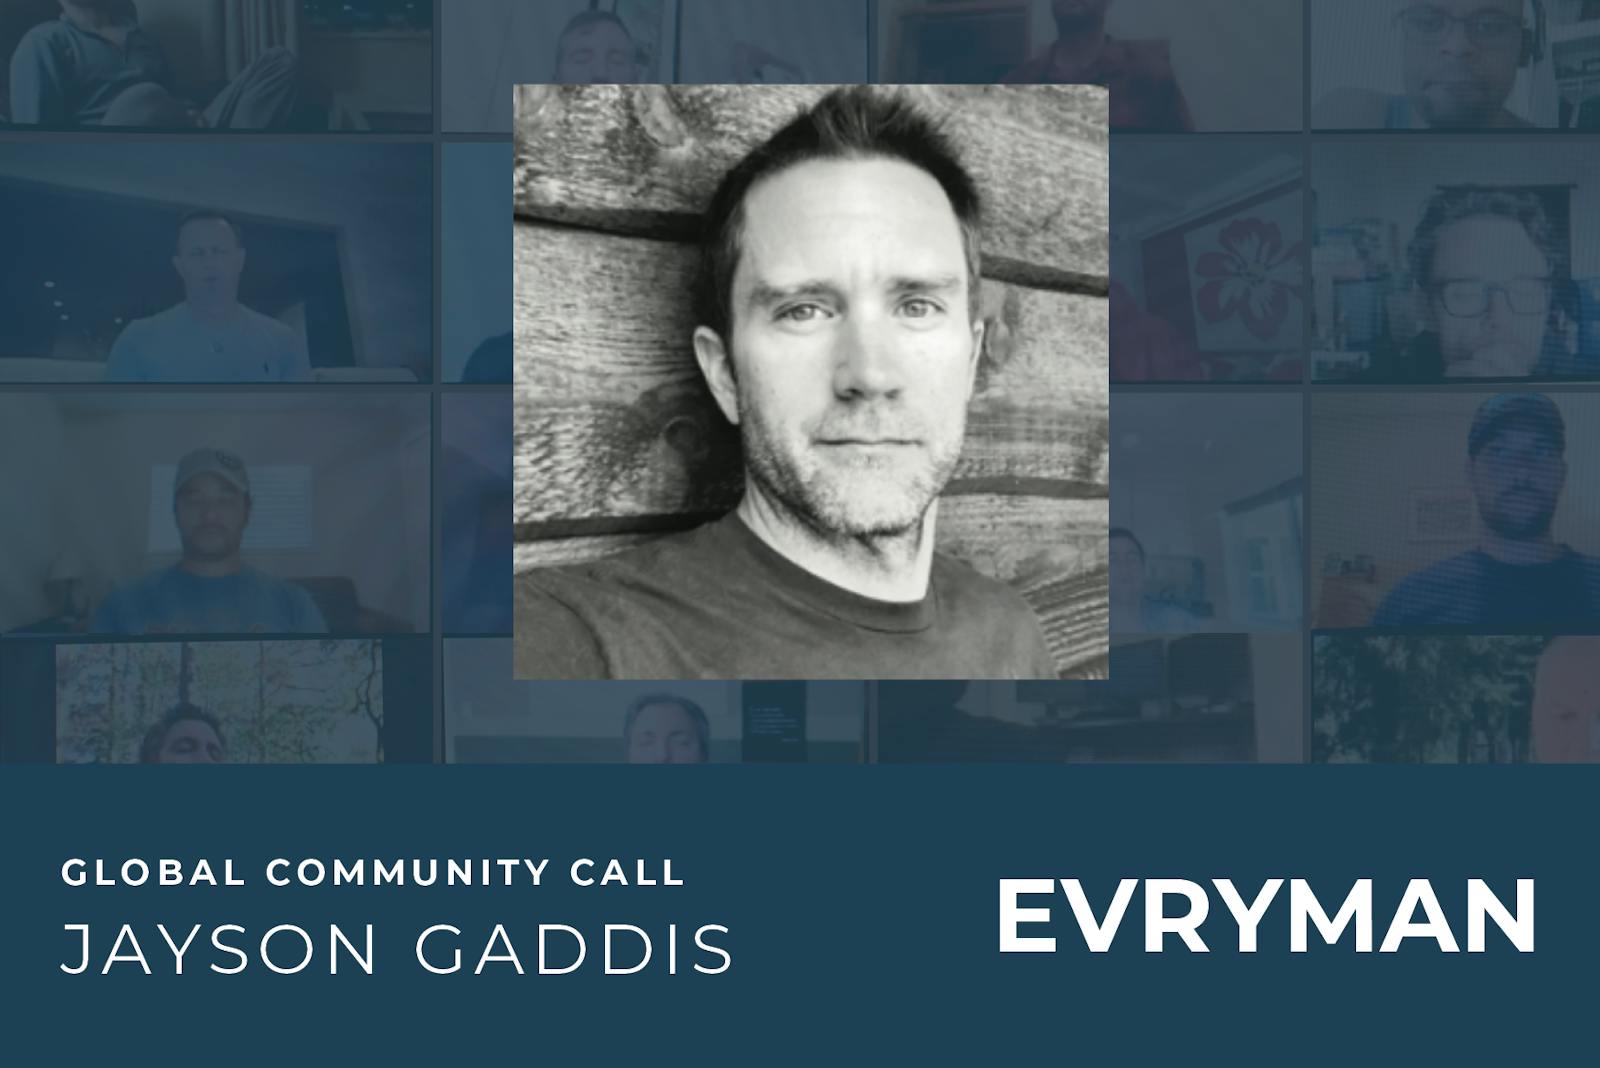 EVRYMAN Global Community Call with special guest Jayson Gaddis